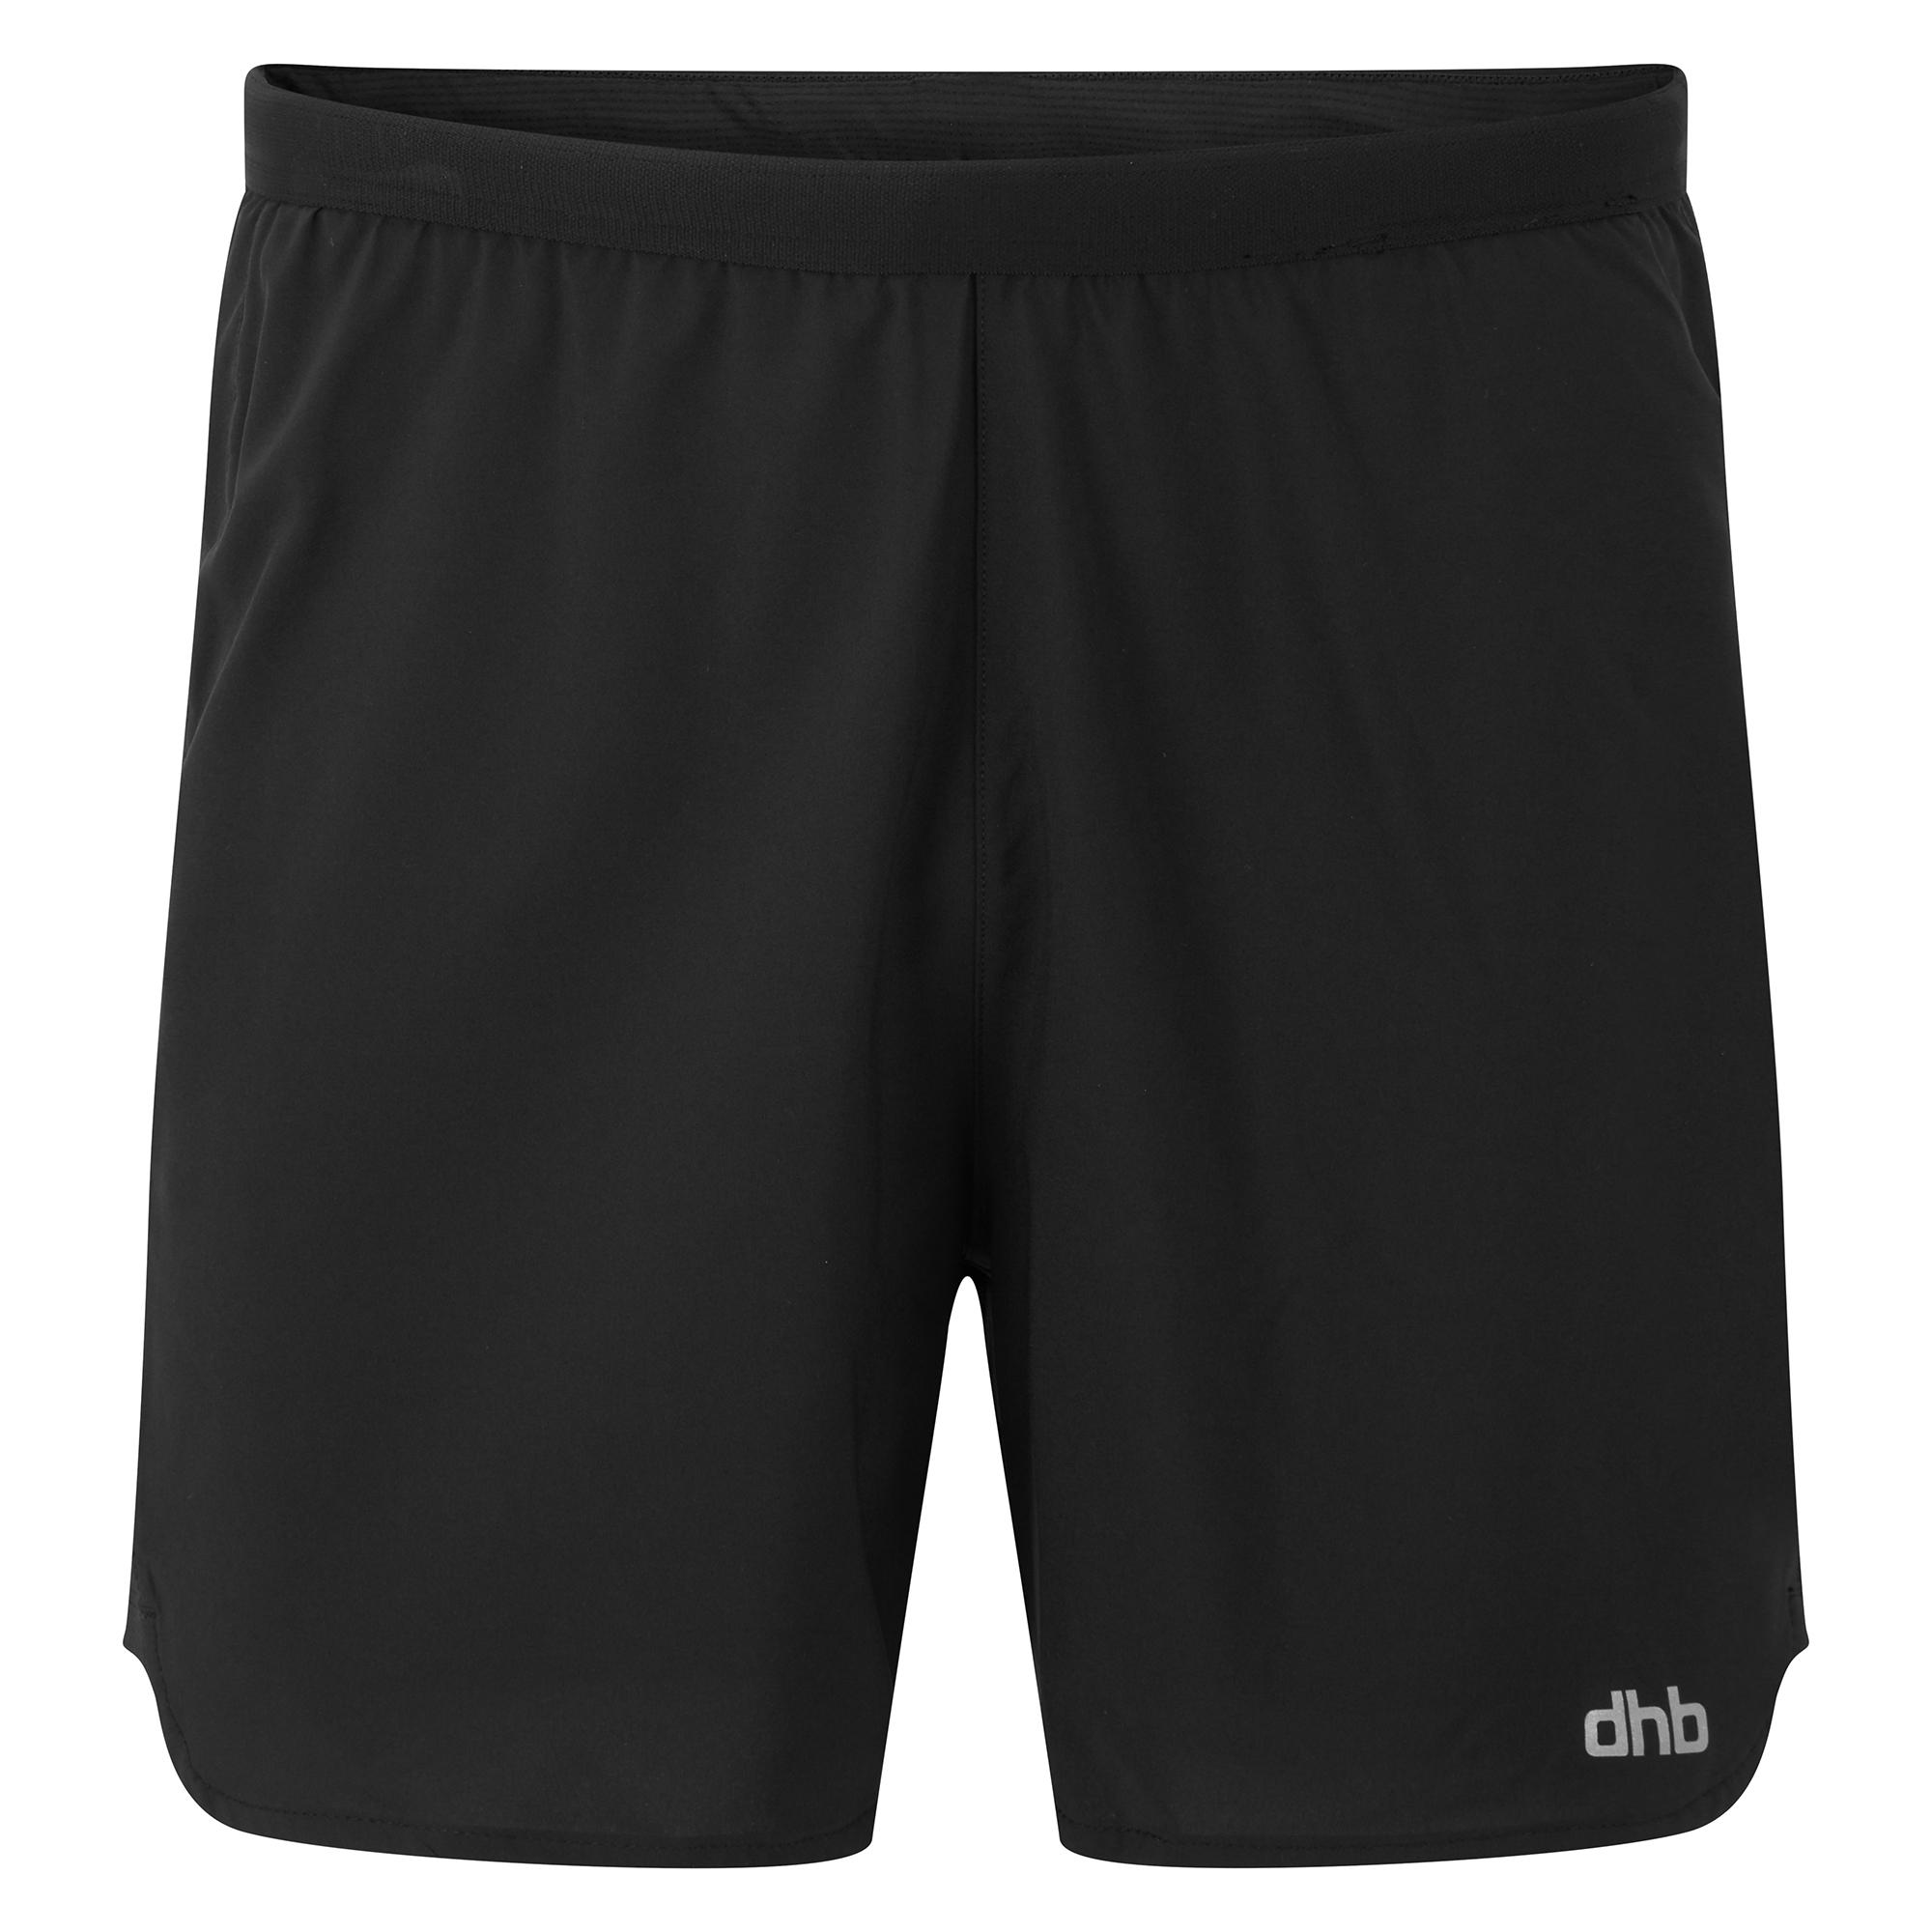 Dhb Aeron Run 5 Liner Shorts - Black